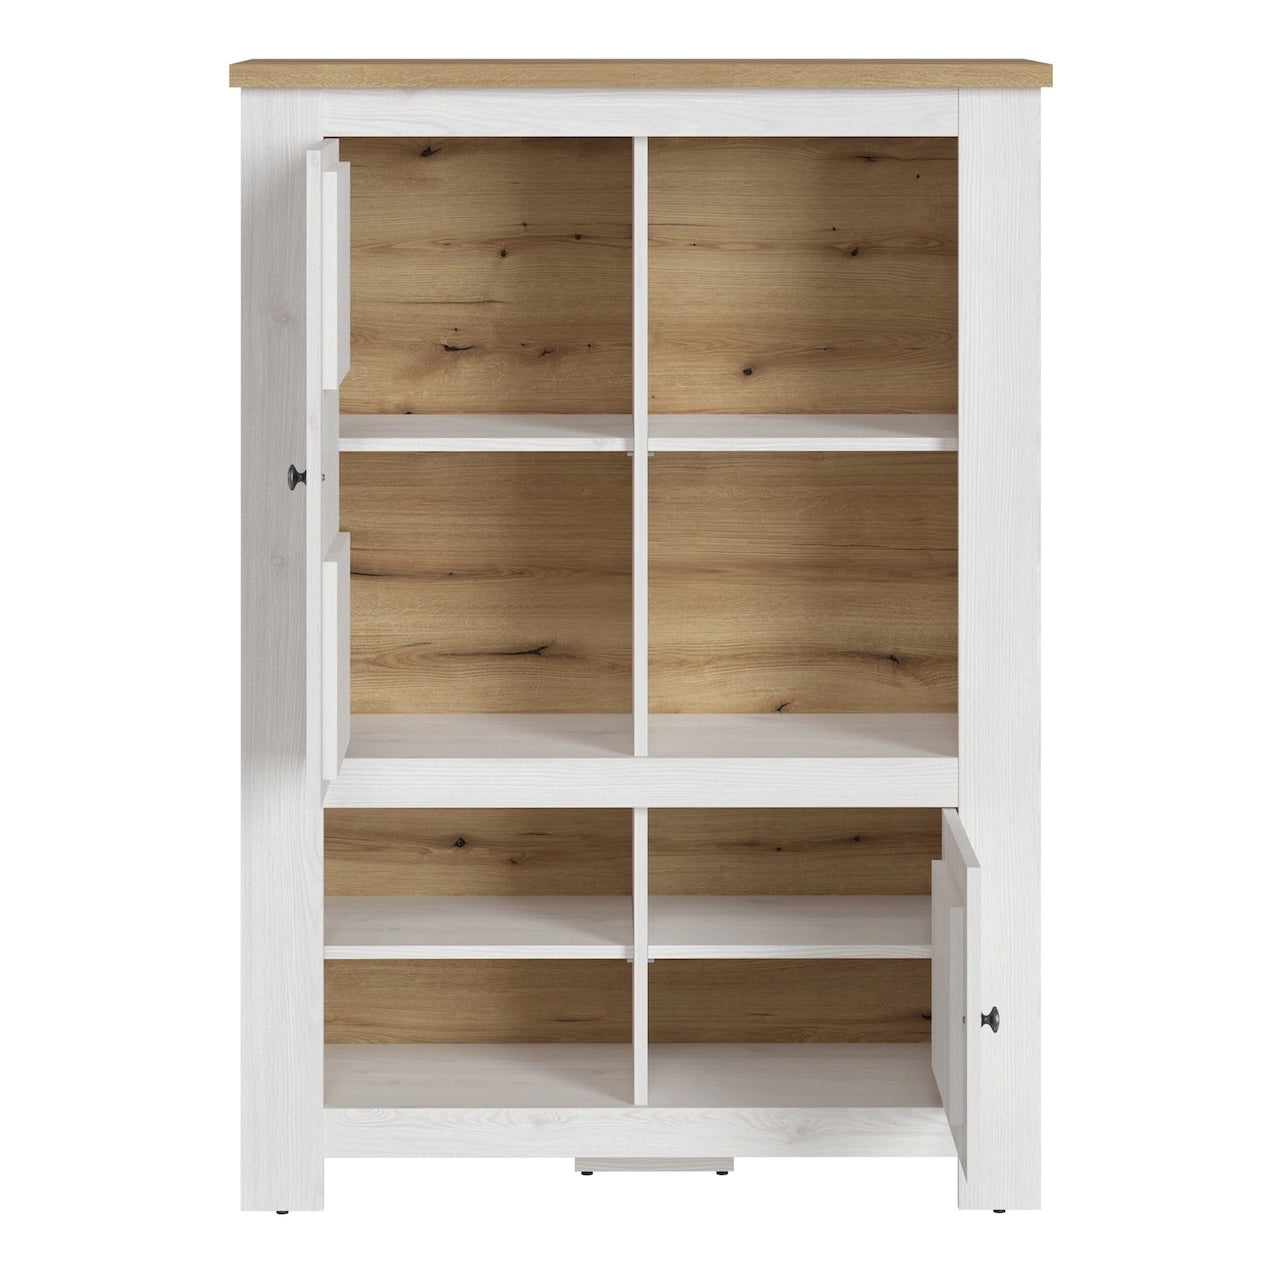 Furniture To Go Celesto 2 Door 4 Shelves Cabinet in White & Oak